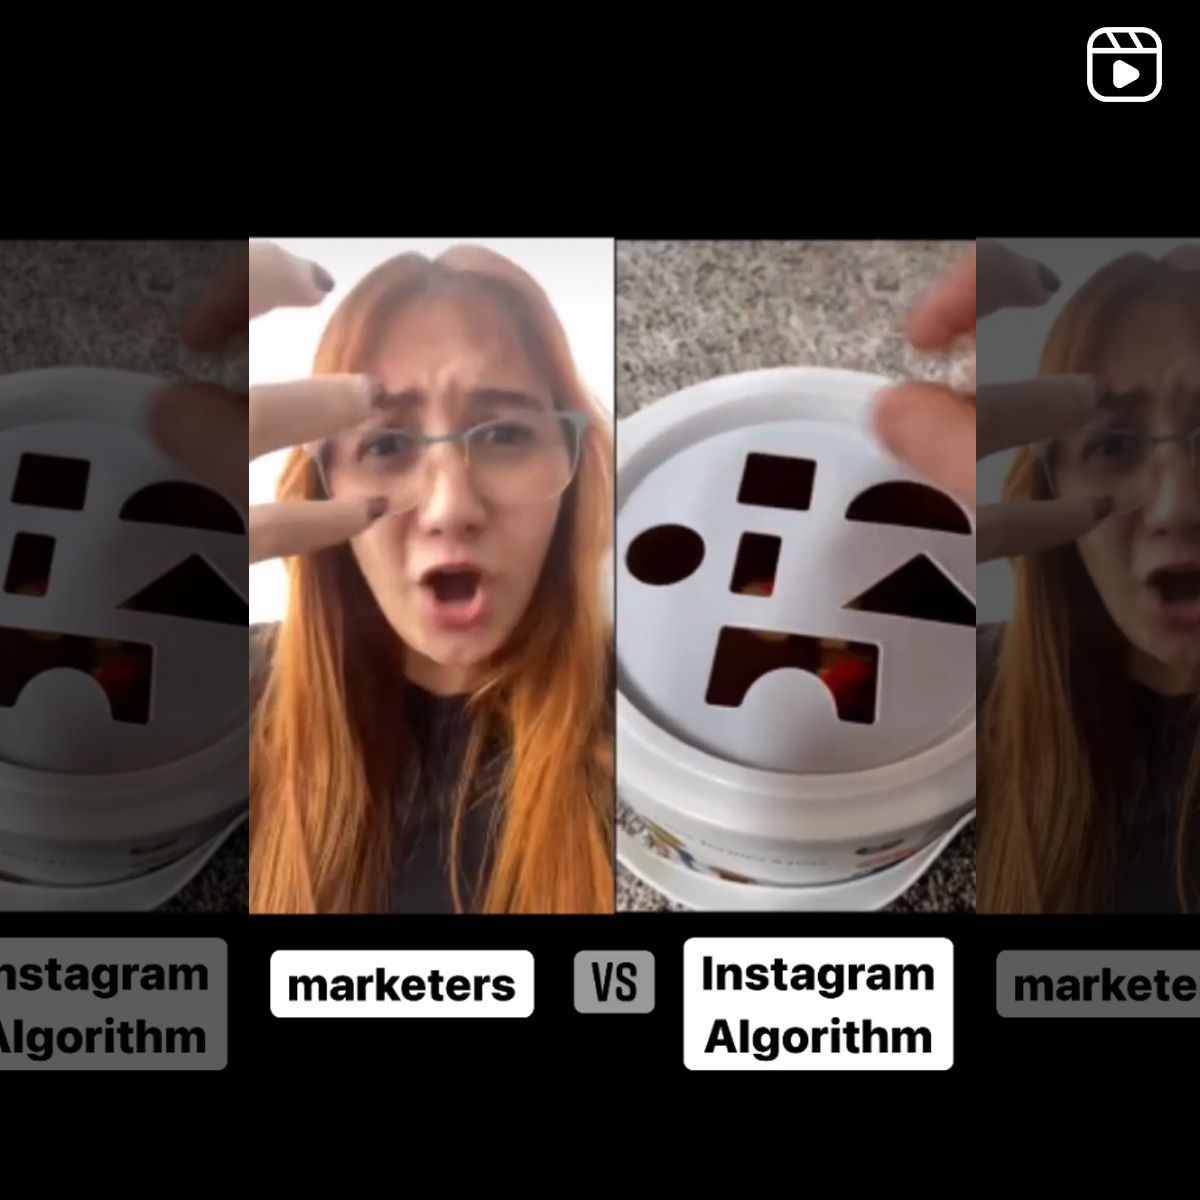 Marketers vs Instagram Algorithm